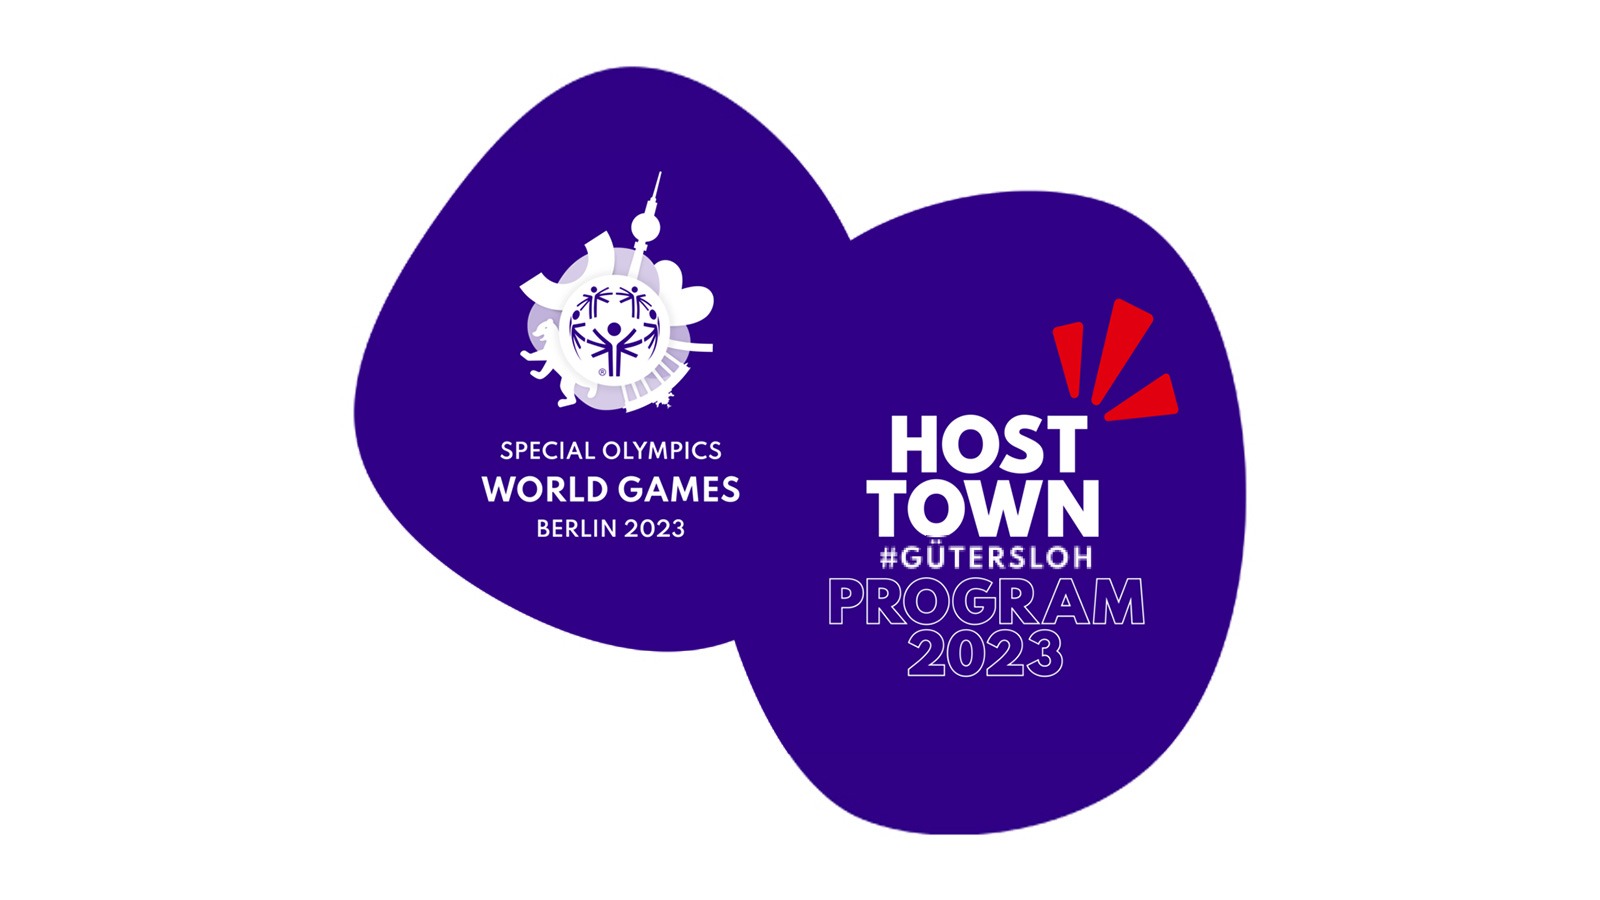 Host Town Program Gütersloh - Special Olympics World Games Berlin 2023 (Bild: Special Olympics World Games)